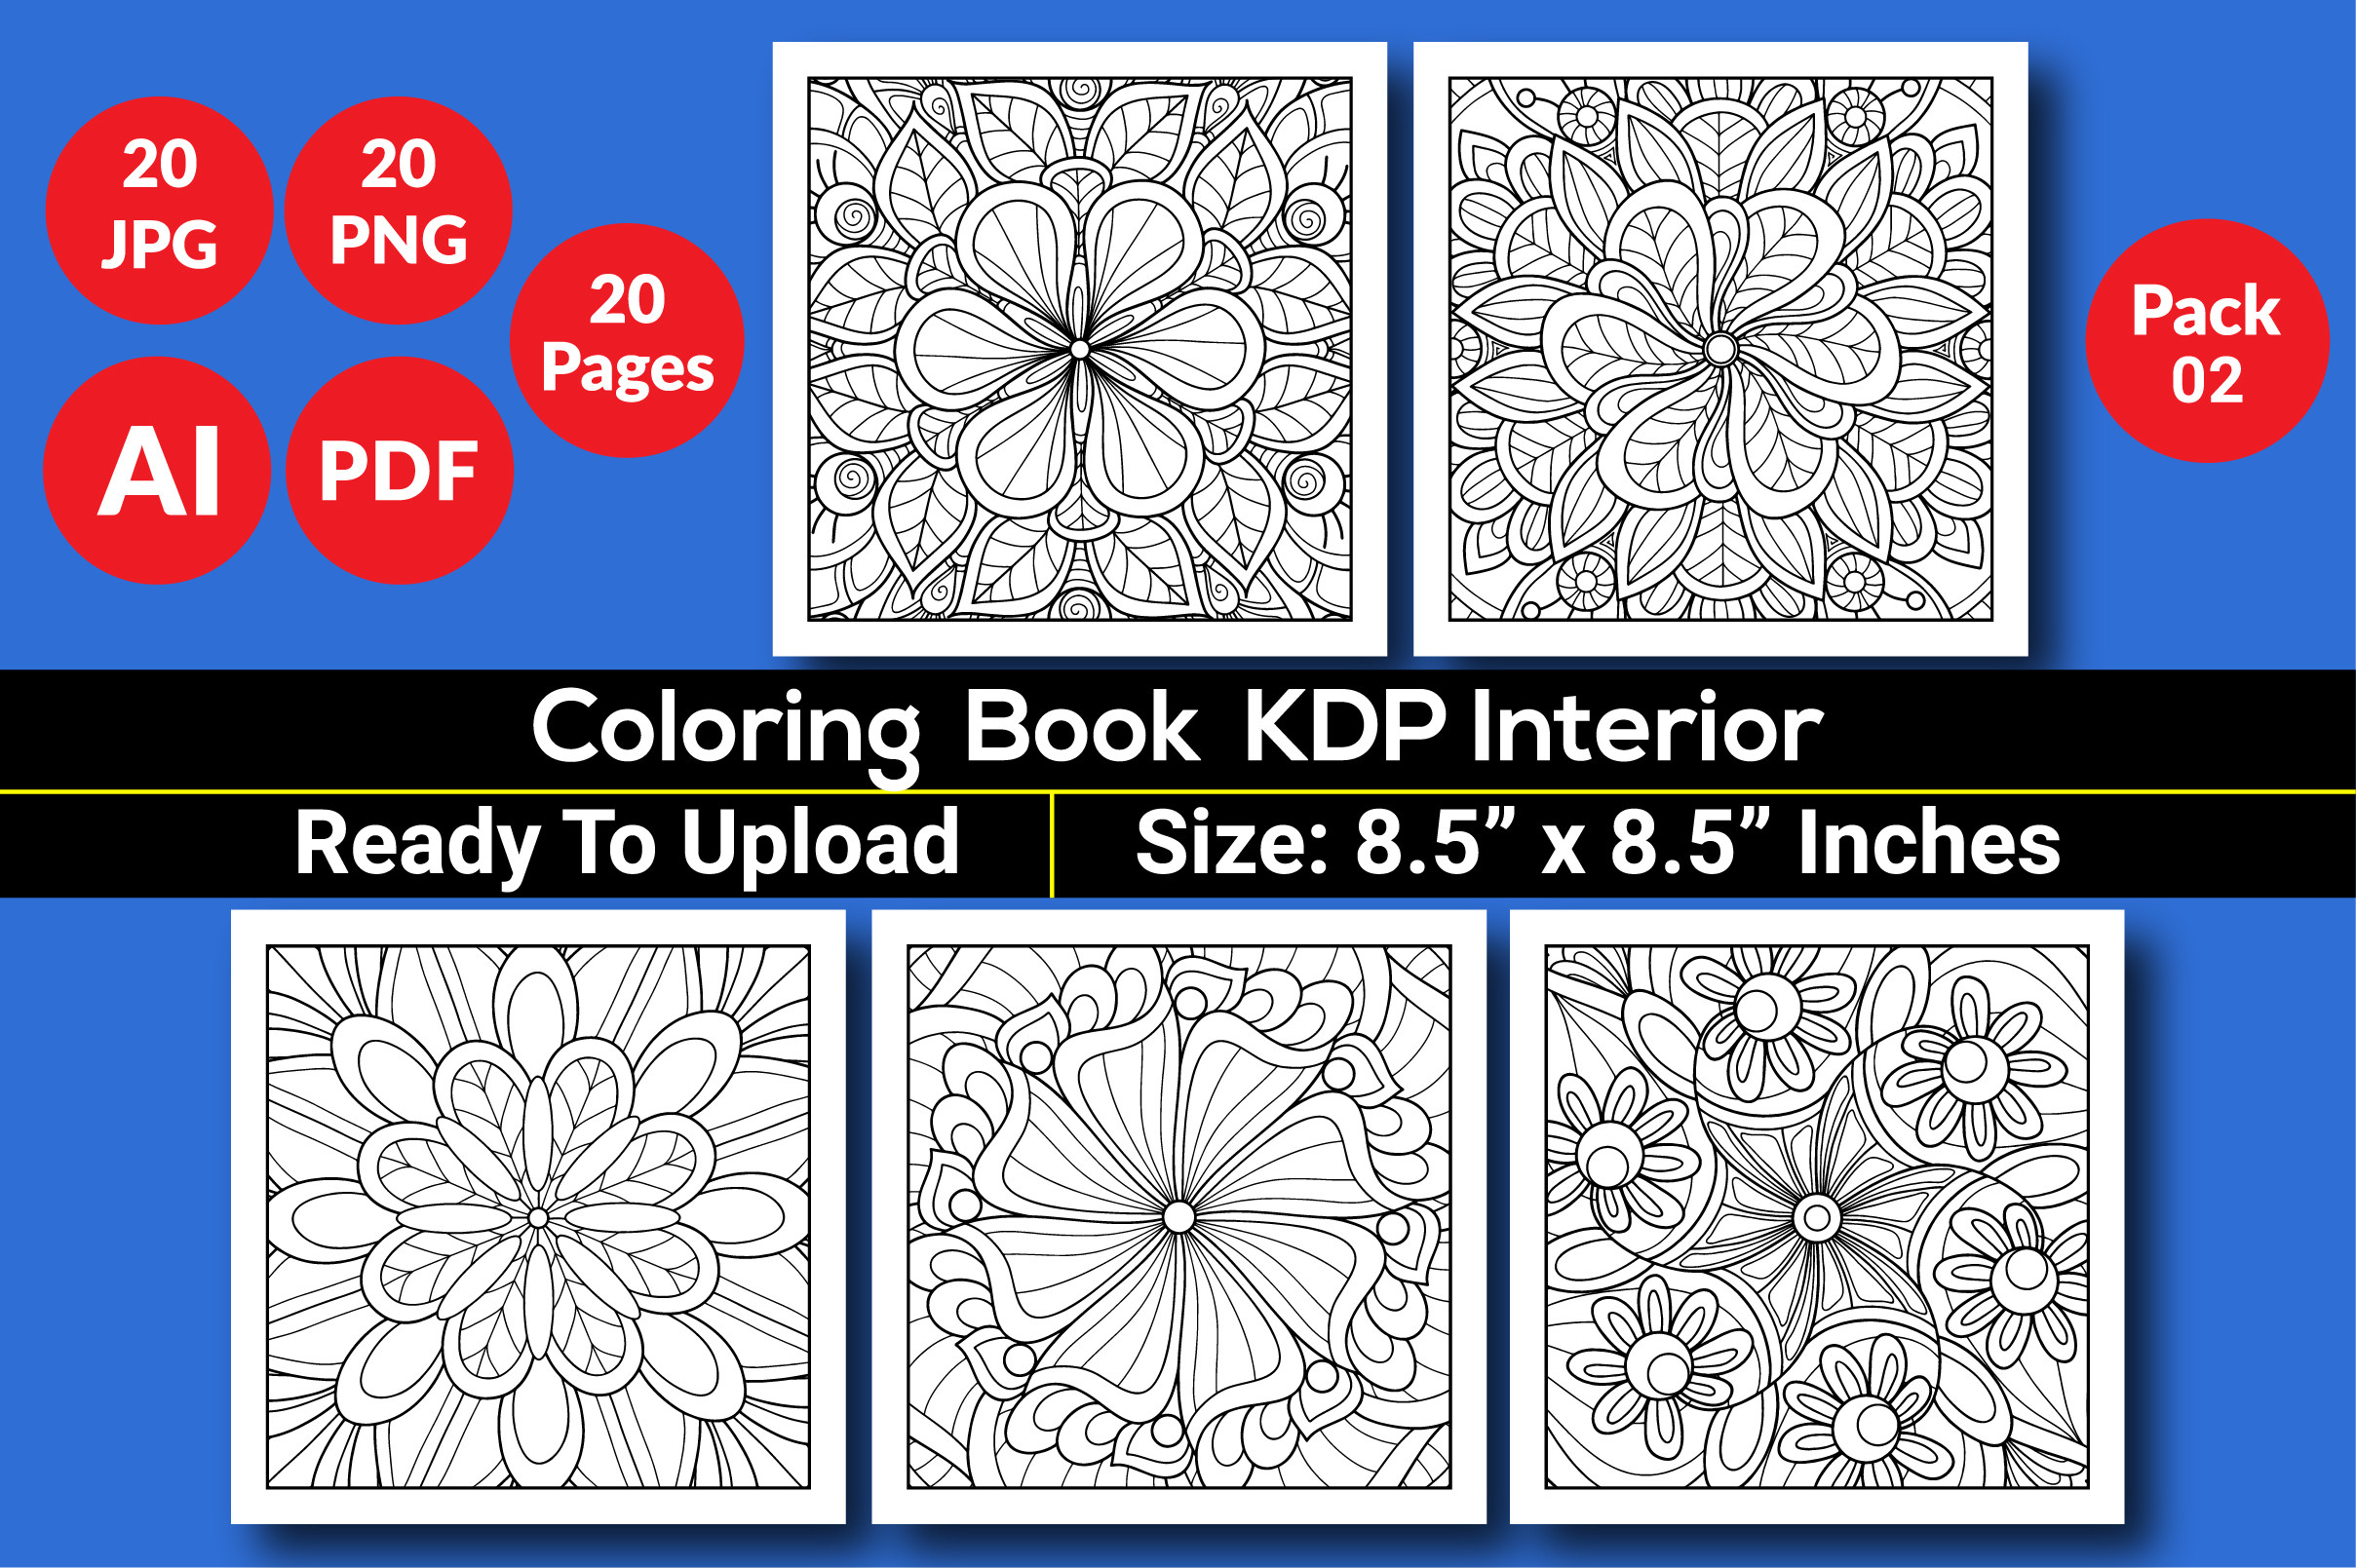 https://www.creativefabrica.com/wp-content/uploads/2021/06/08/Coloring-Book-KDP-Interior-Graphics-13093914-1.jpg